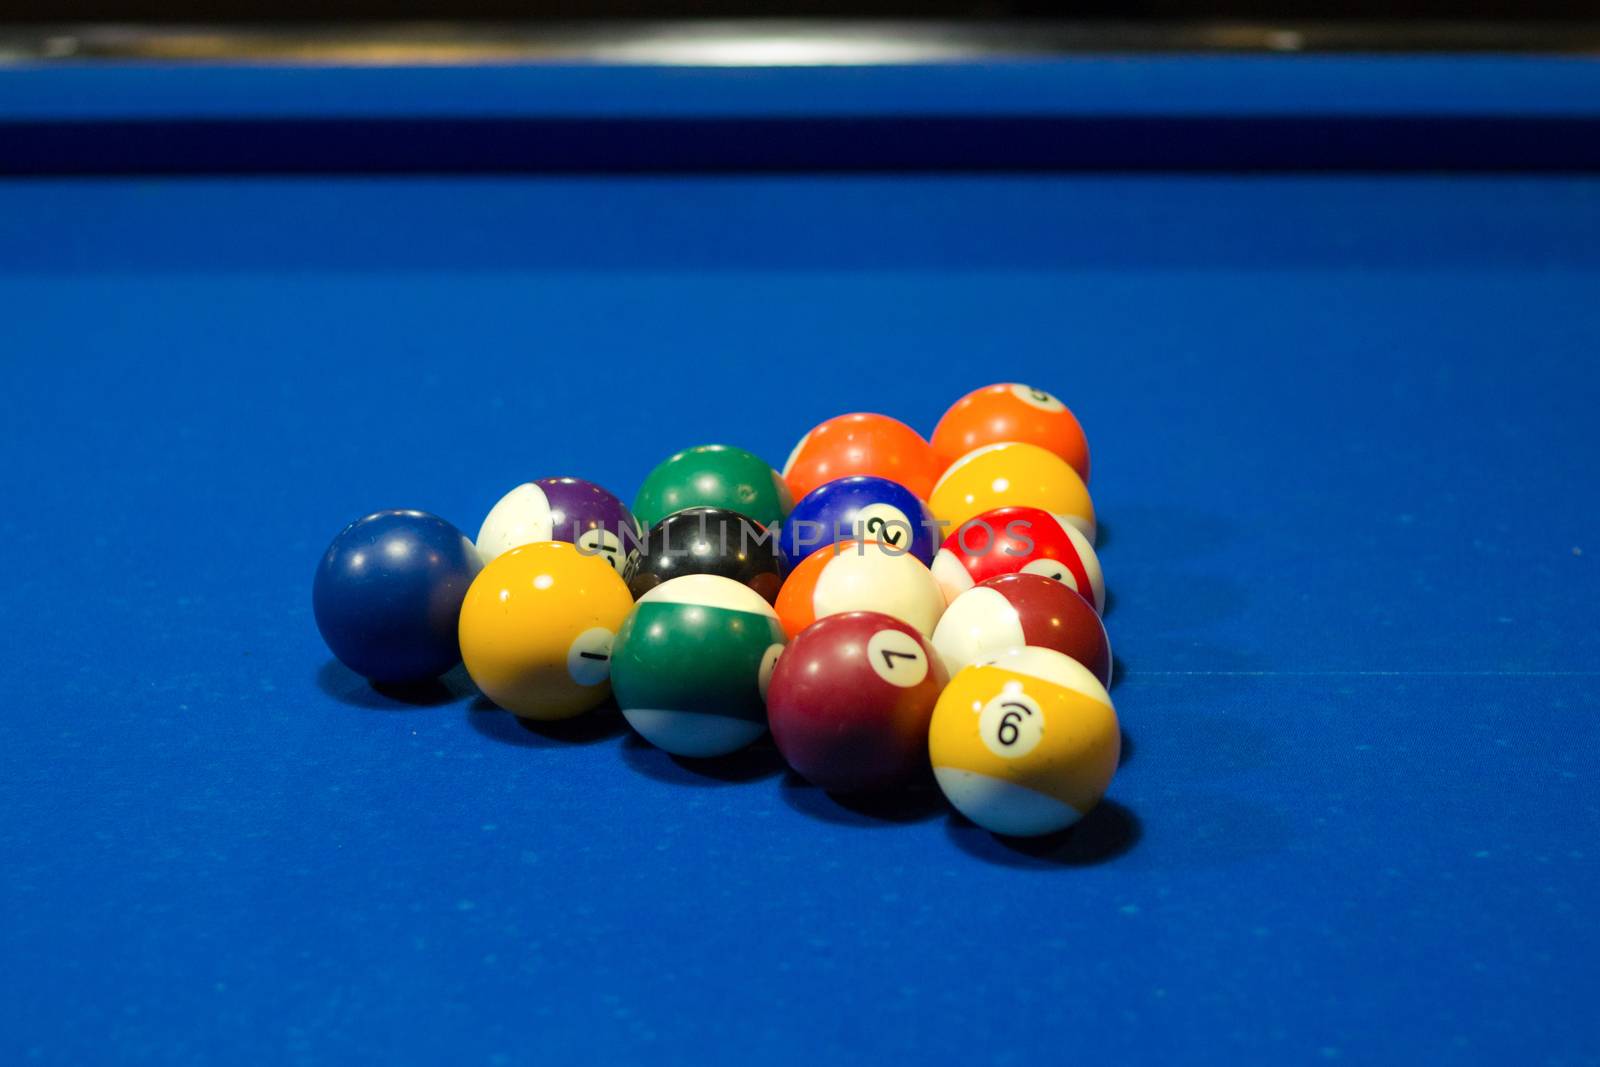 Billiard pool game balls in starting triangular position by VeraVerano